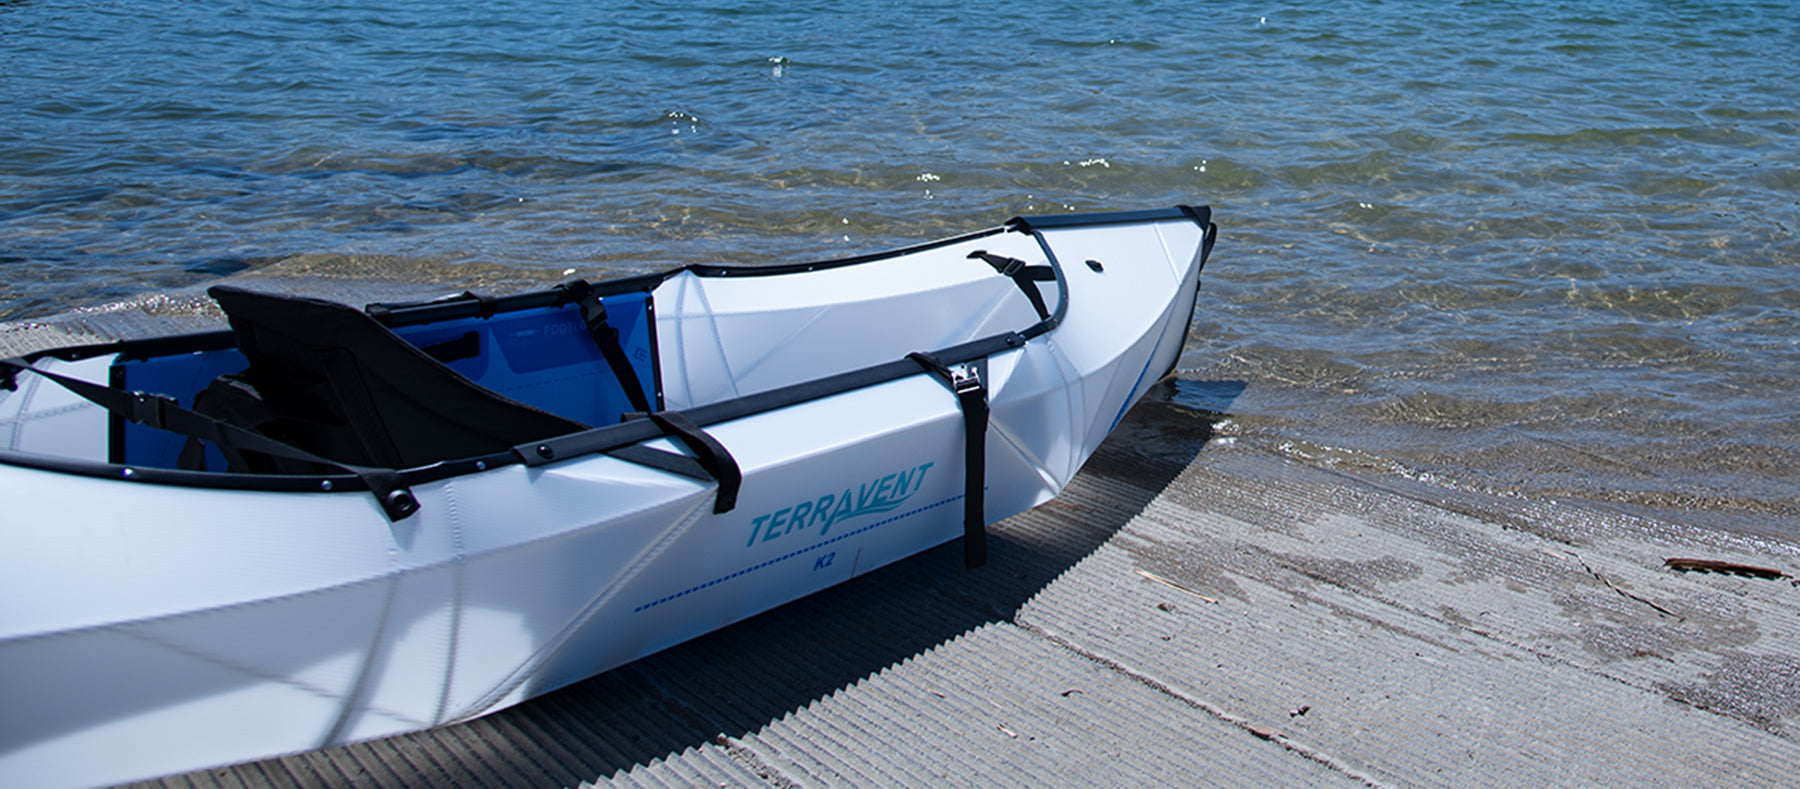 Folding kayak. Foldable Kayak. Terravent K2 Portable Folding Kayak